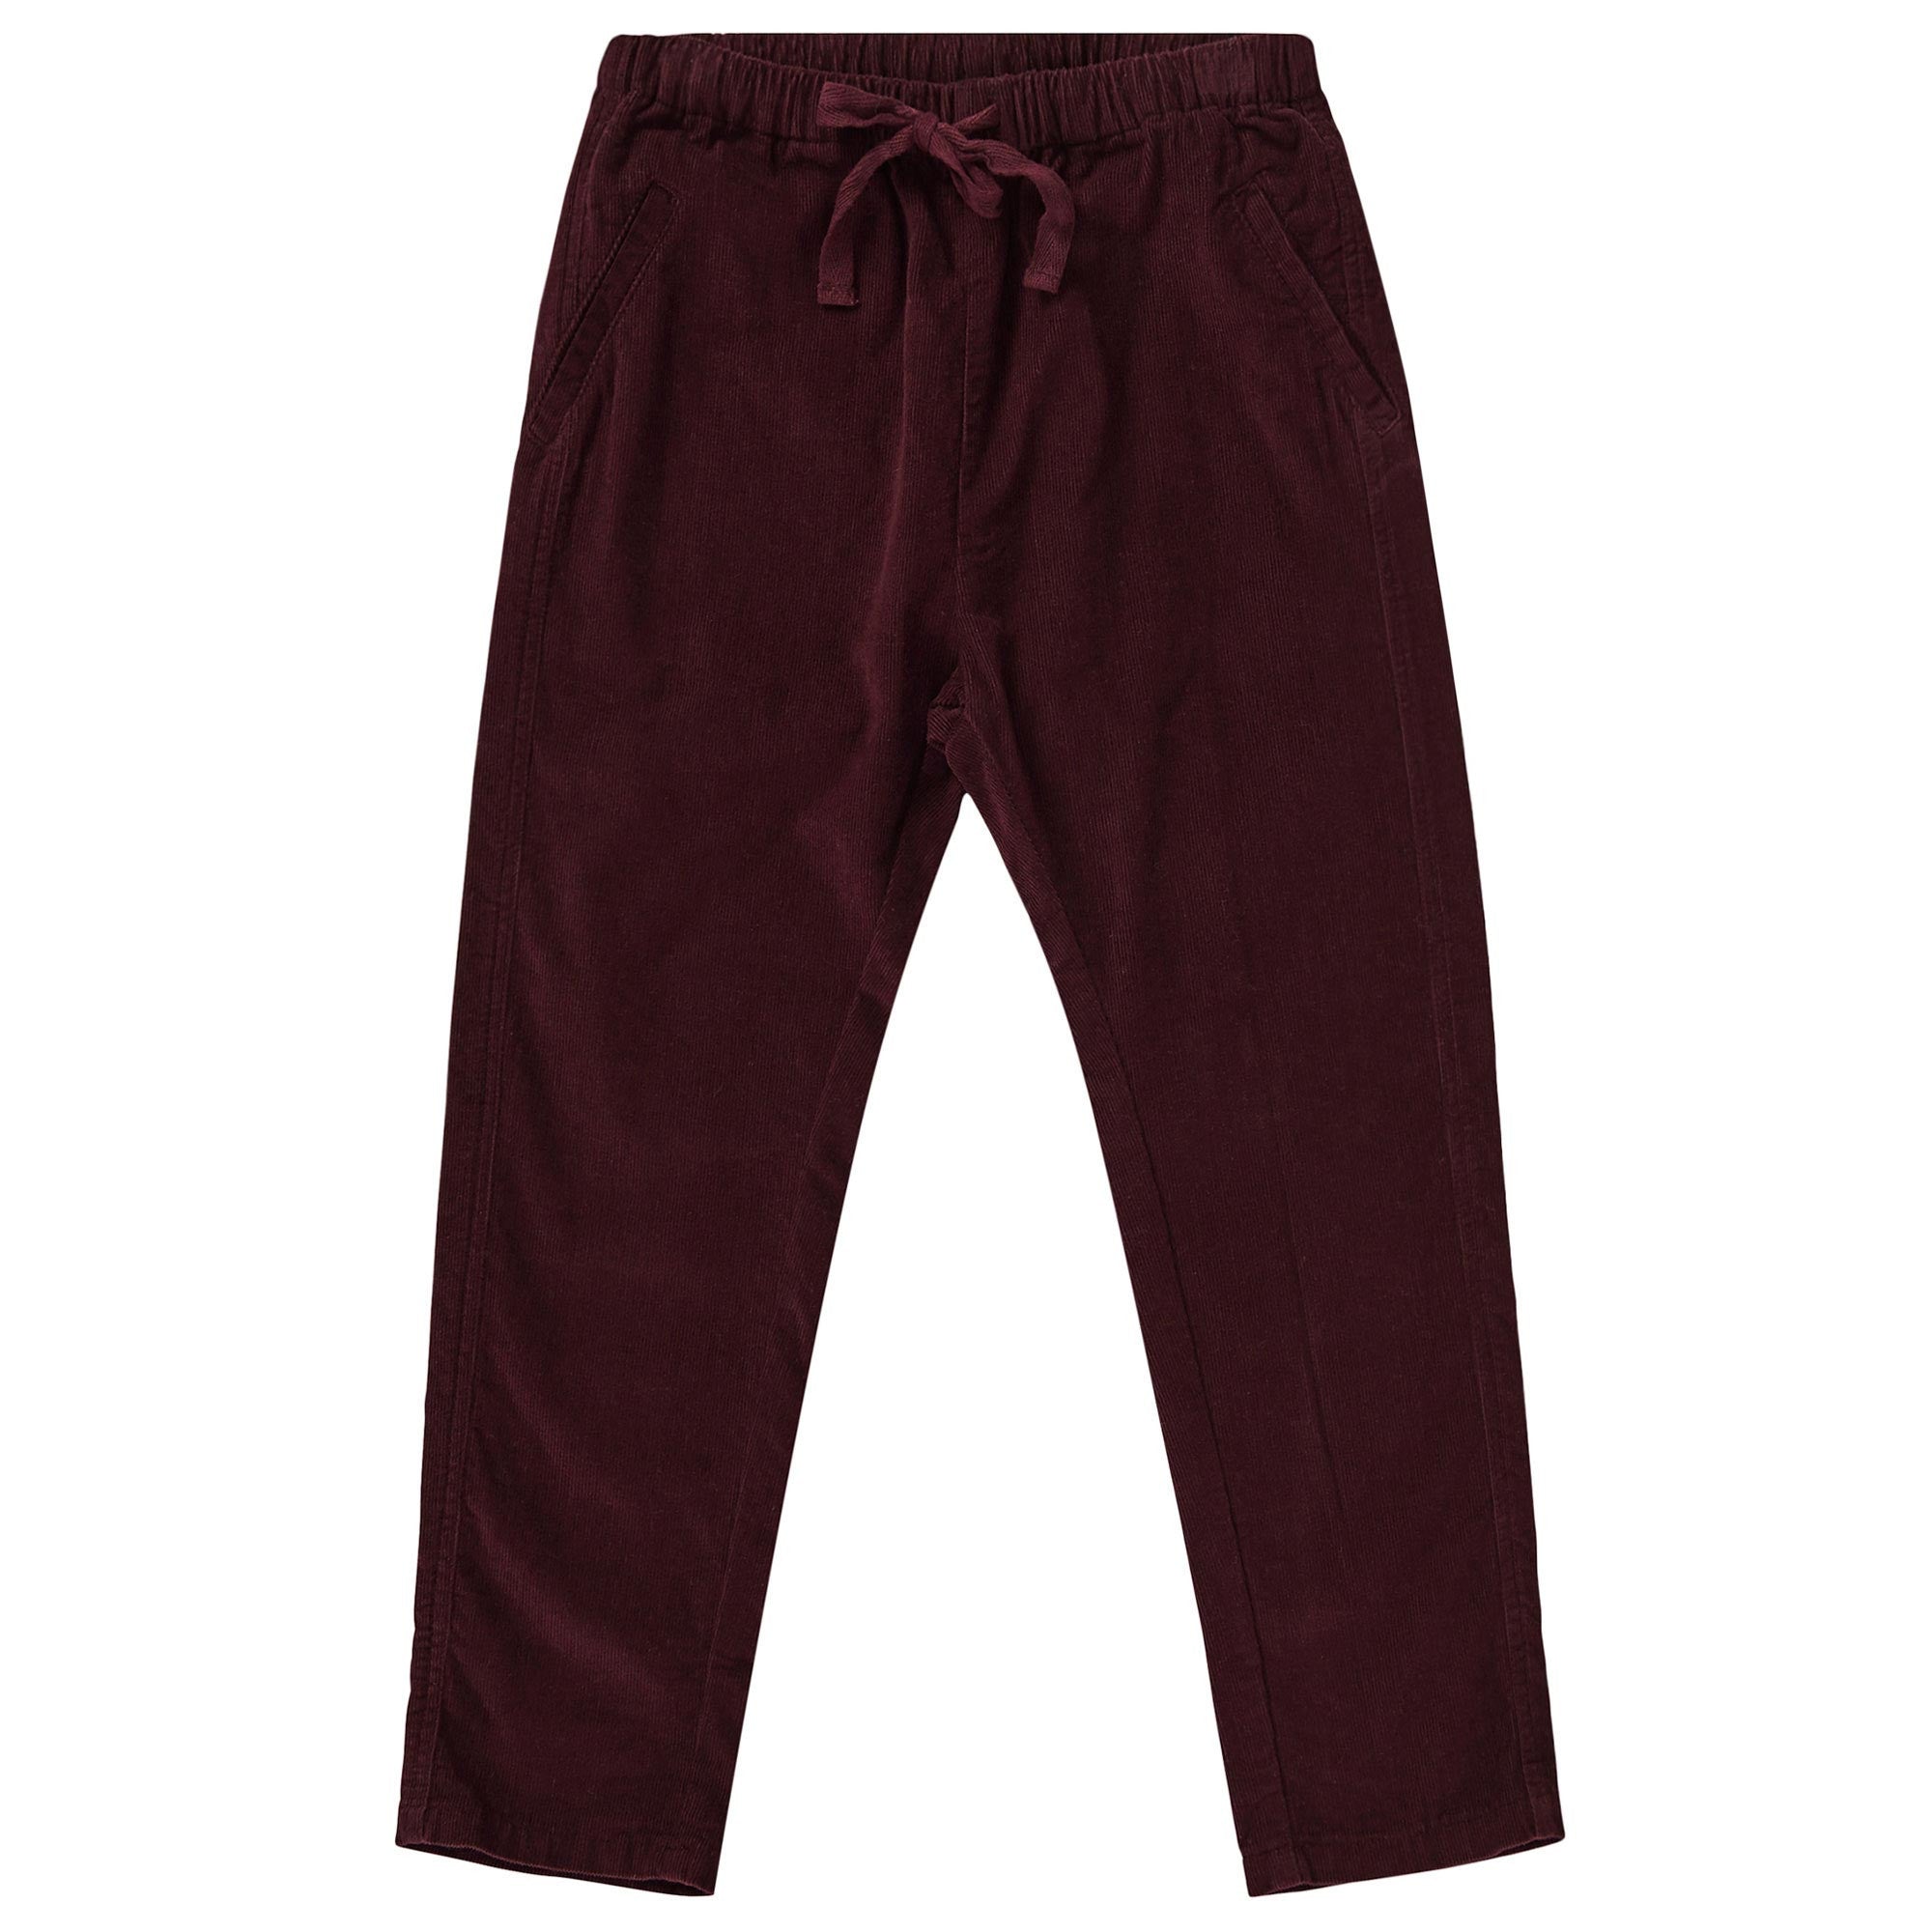 Boys Wine Red Cotton Trousers - CÉMAROSE | Children's Fashion Store - 1